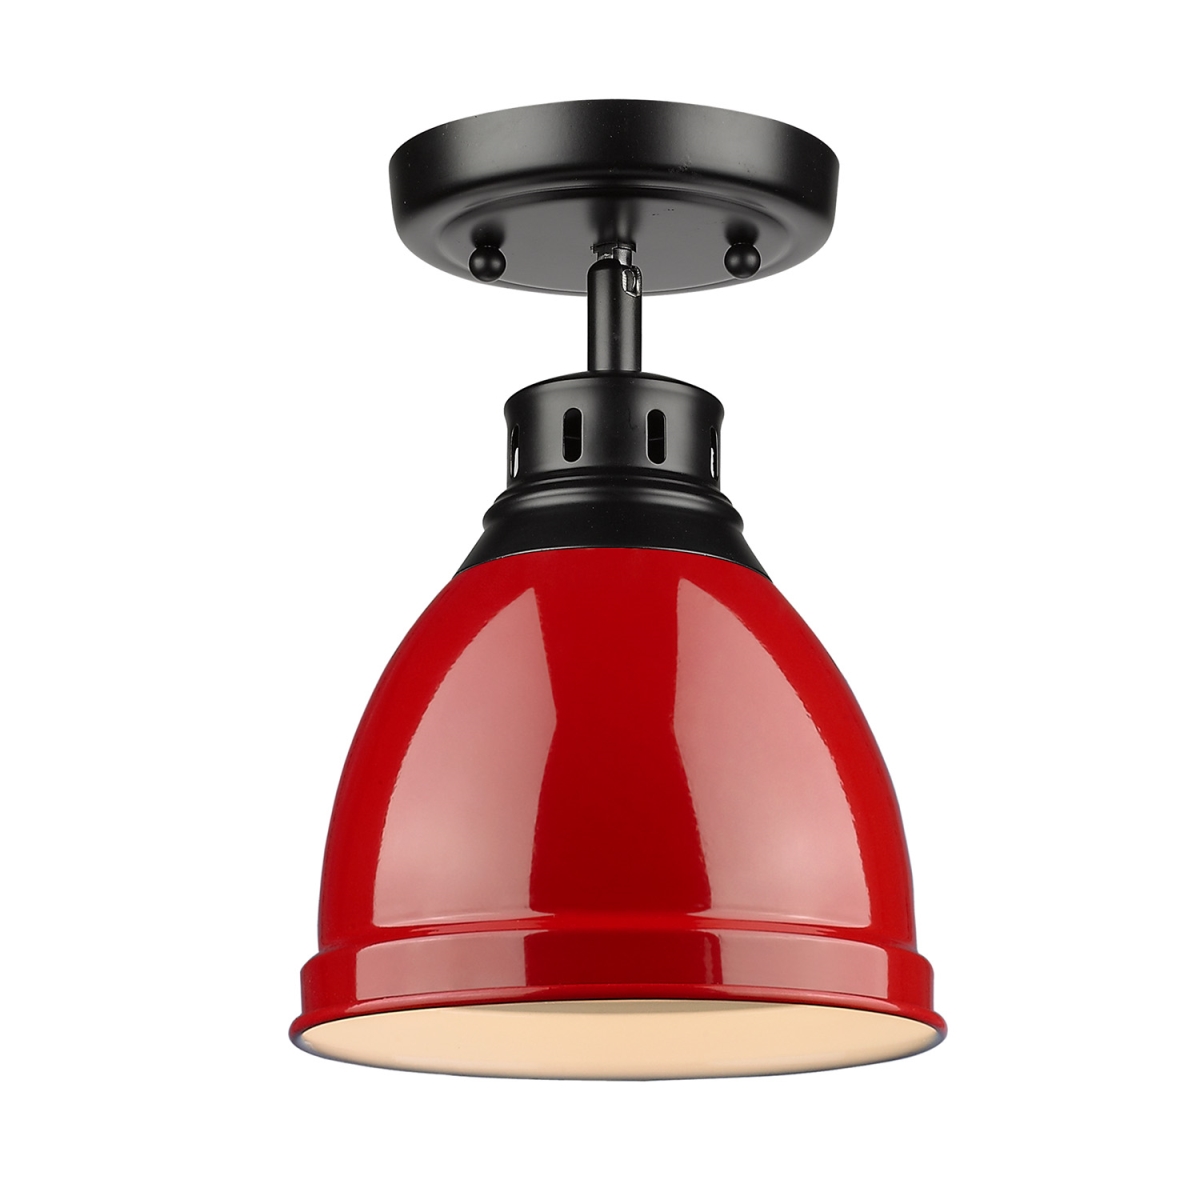 3602-fm Blk-rd Duncan Flush Mount Light With Red Shade, Black